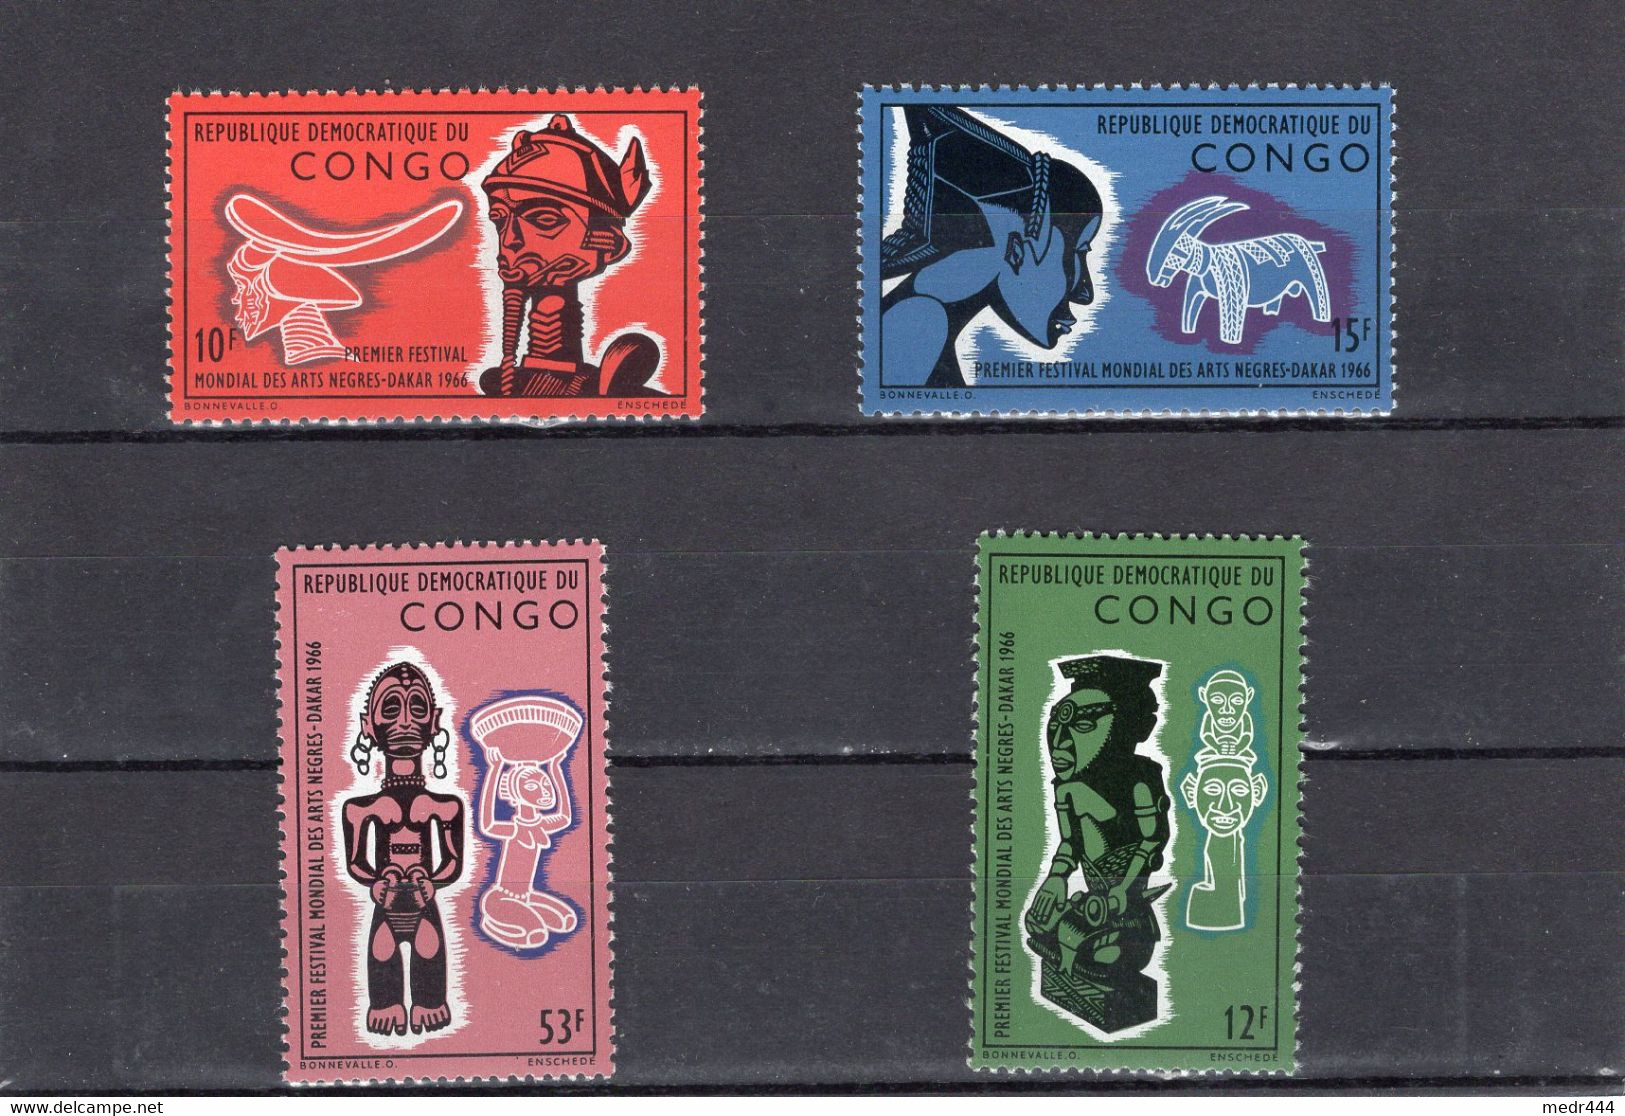 Democtratic Republic Of Congo/Congo 1966 - World Festival Of Negro Arts, Dakar - Stamps 4v - MNH** - Excellent Quality - Sammlungen